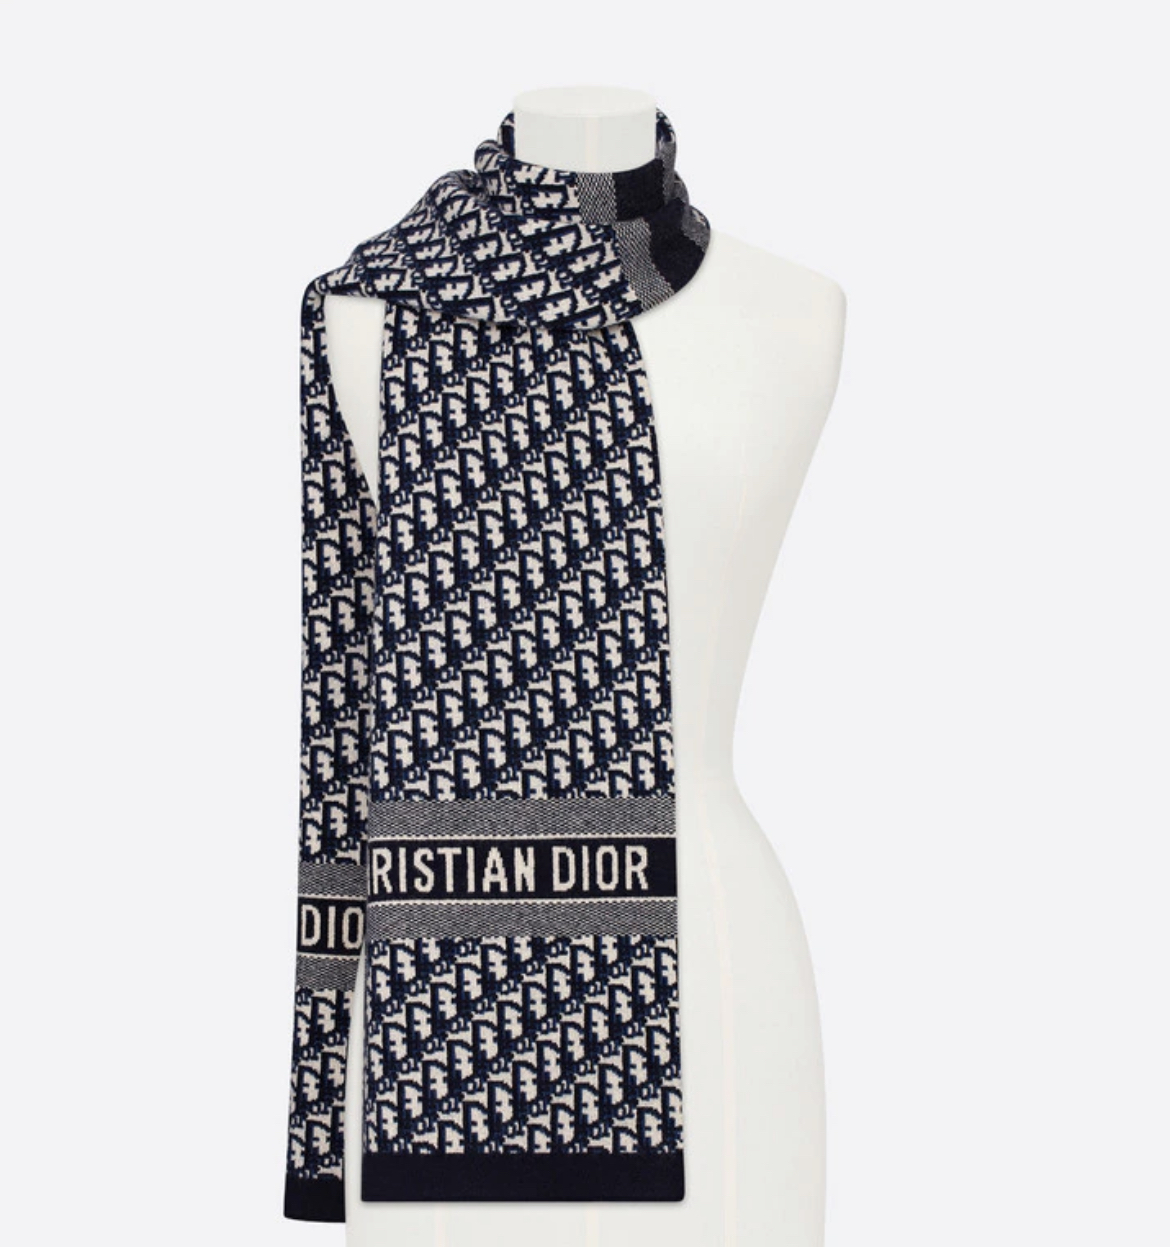 Christian Dior Dior Homme Oblong Scarves, $237, yoox.com